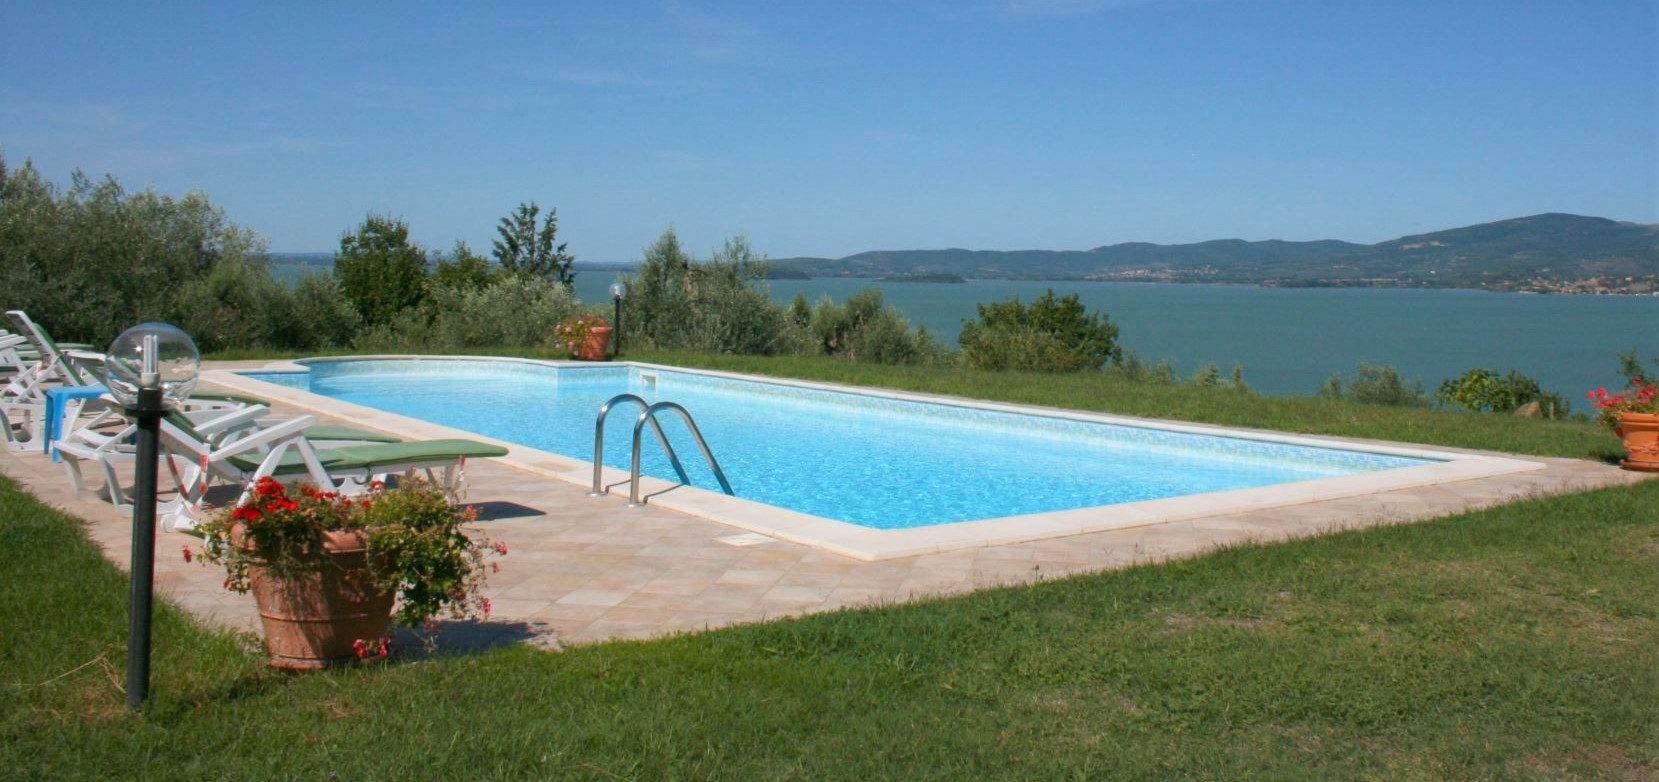 200_c0bf4d1_Casa Monte del Lago vakantiehuis met prive zwembad Trasimenomeer Magione30